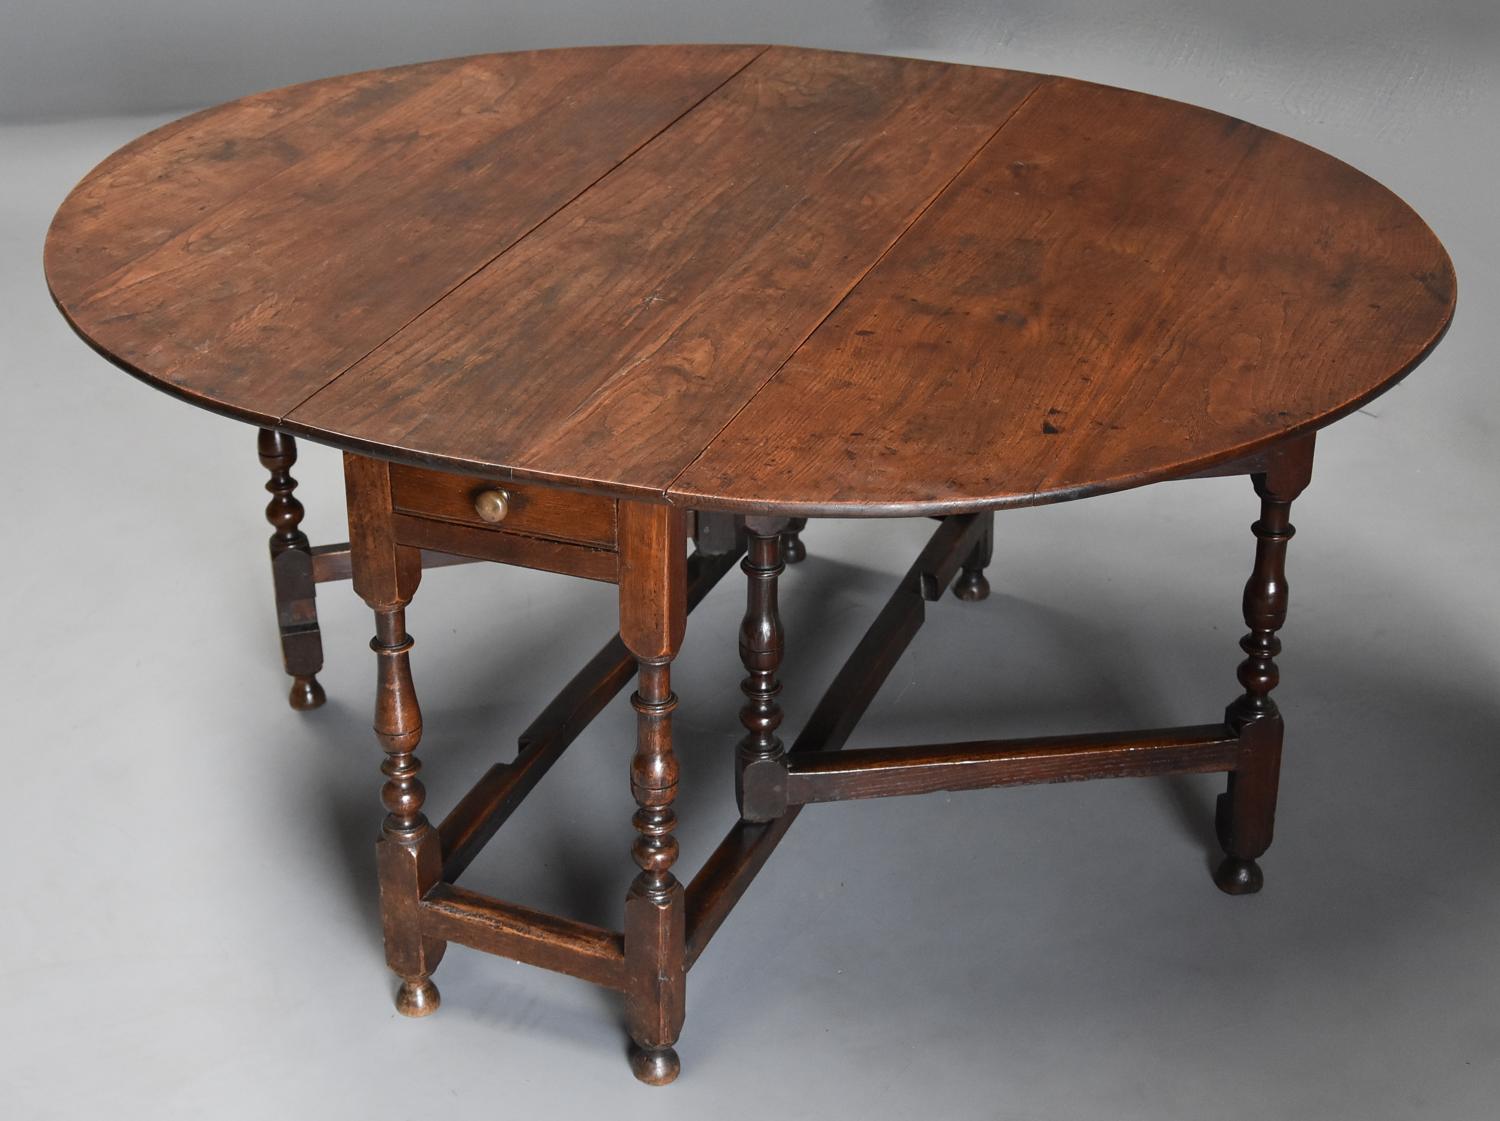 17thc oak gateleg table of good, versatile size with fine patina